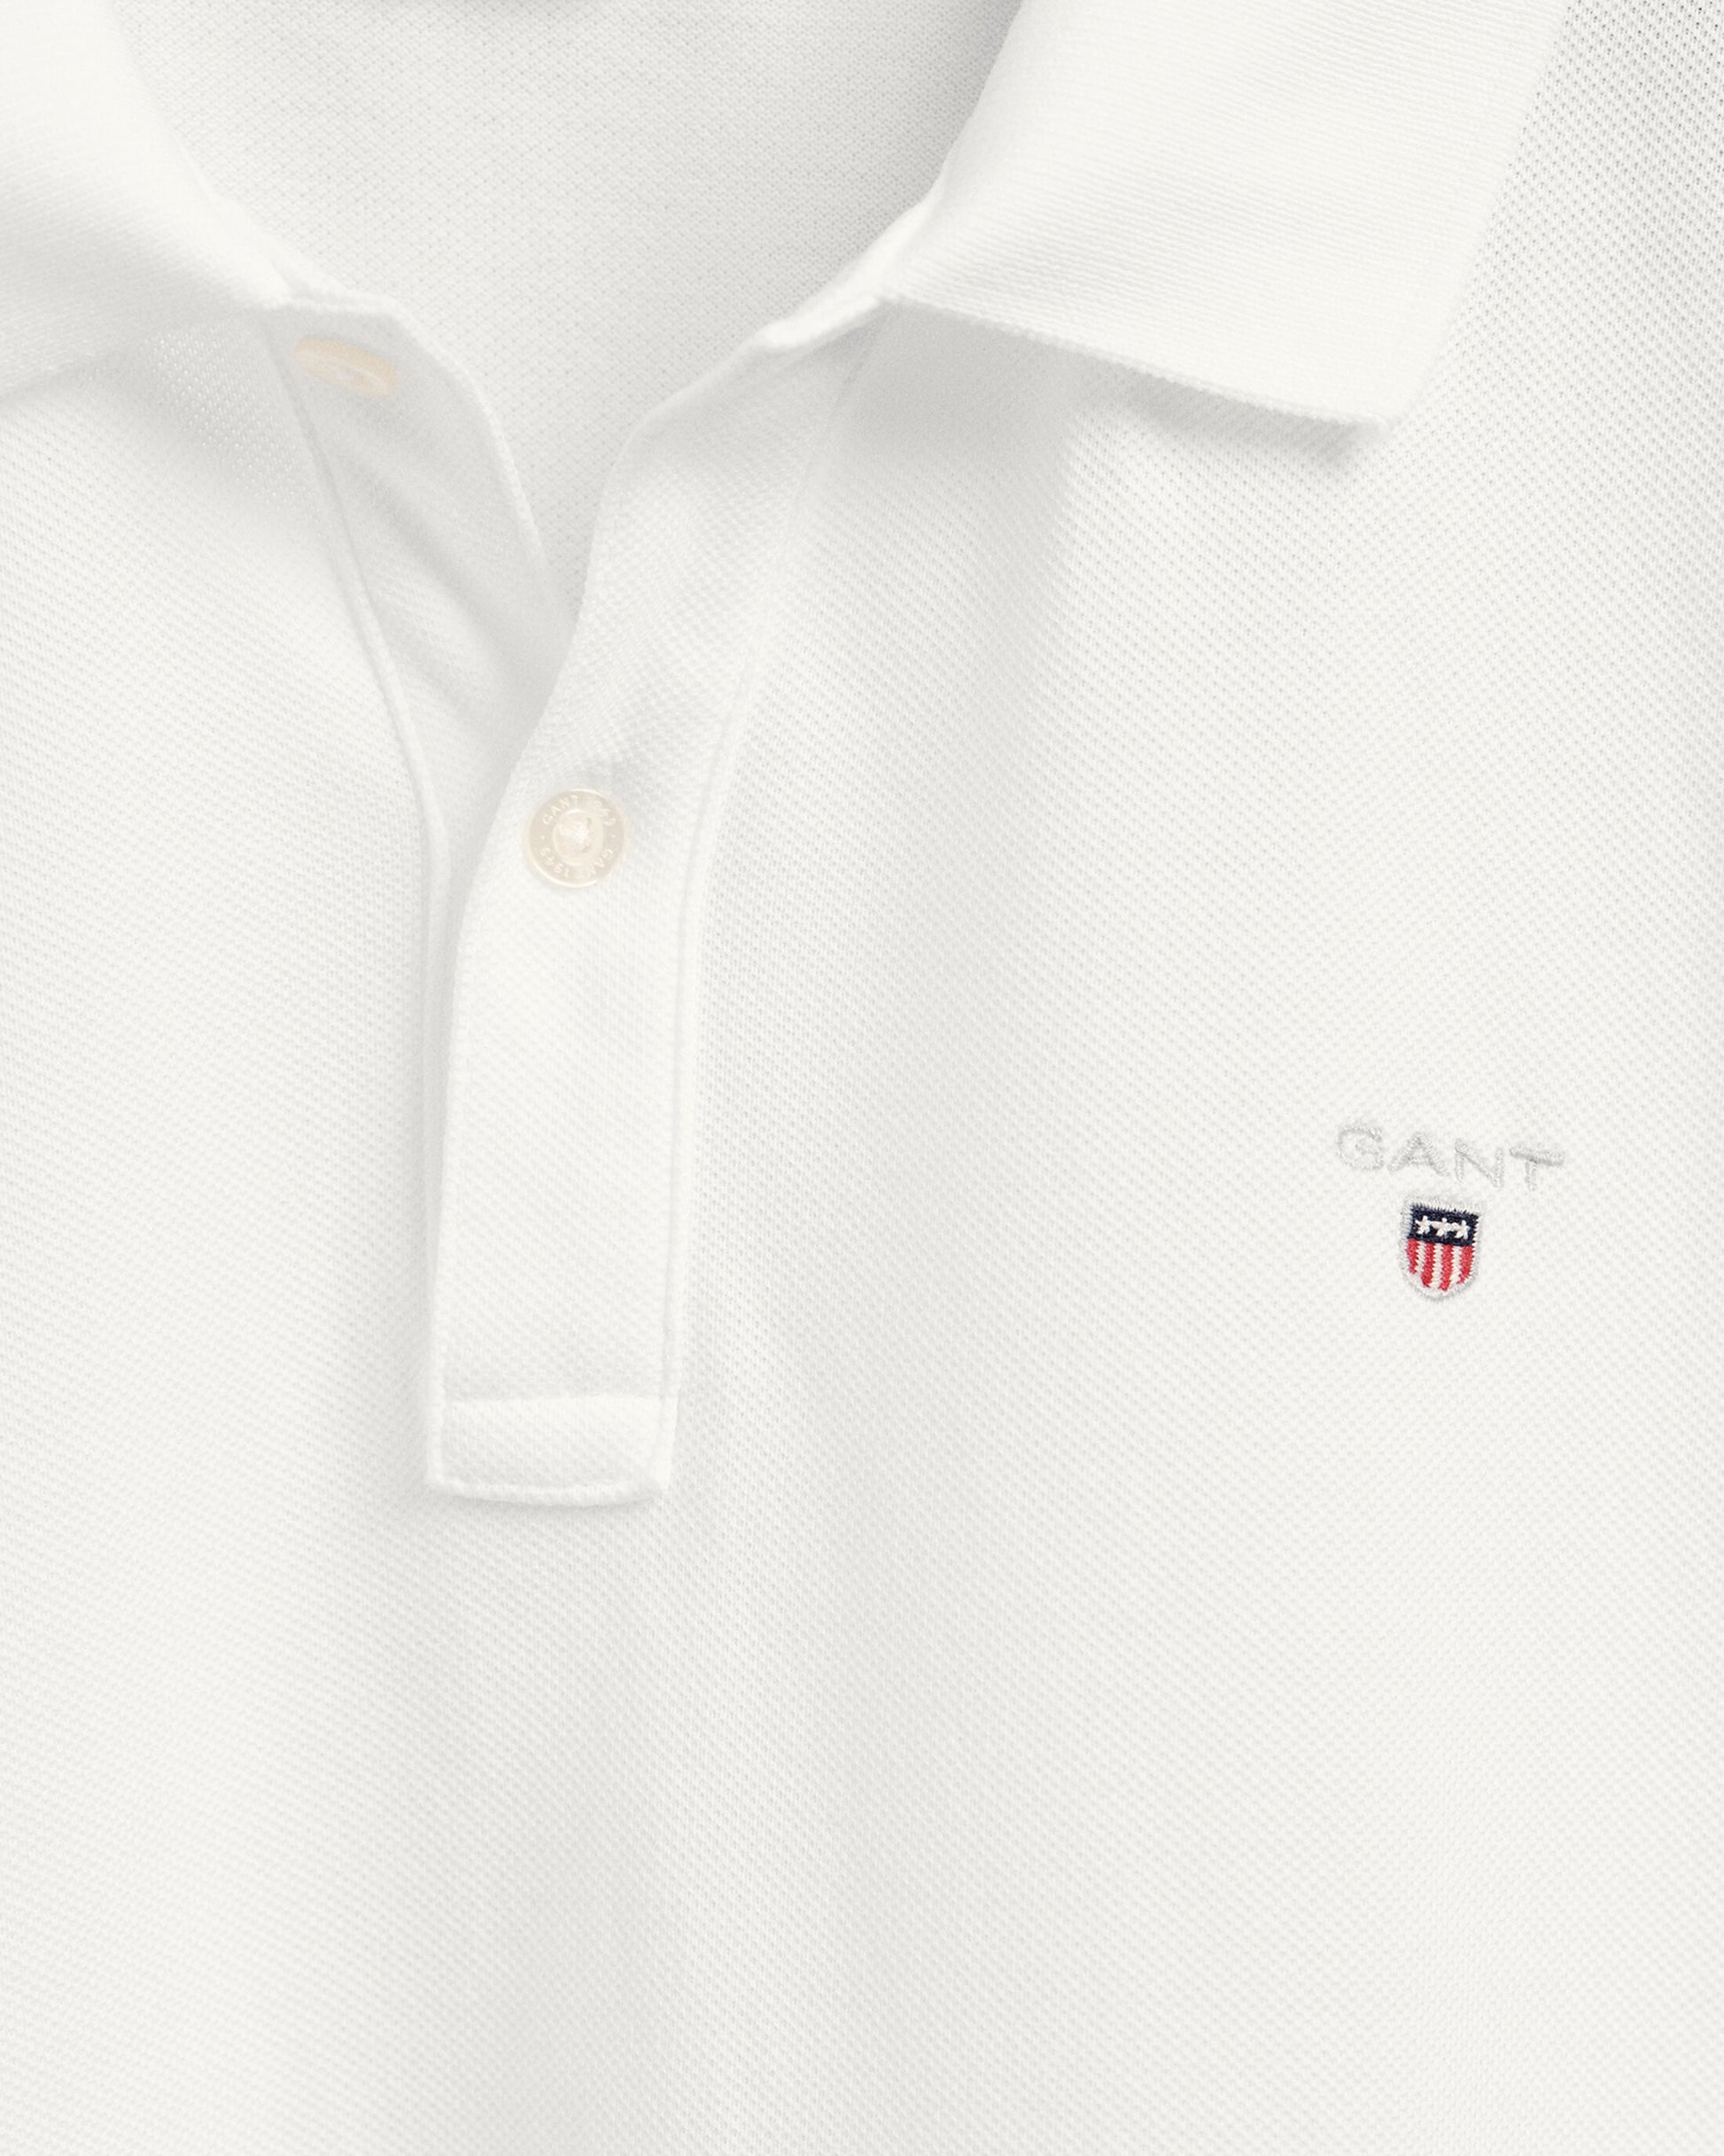 Gant, T-shirts, Gant - White short sleeved polo shirt